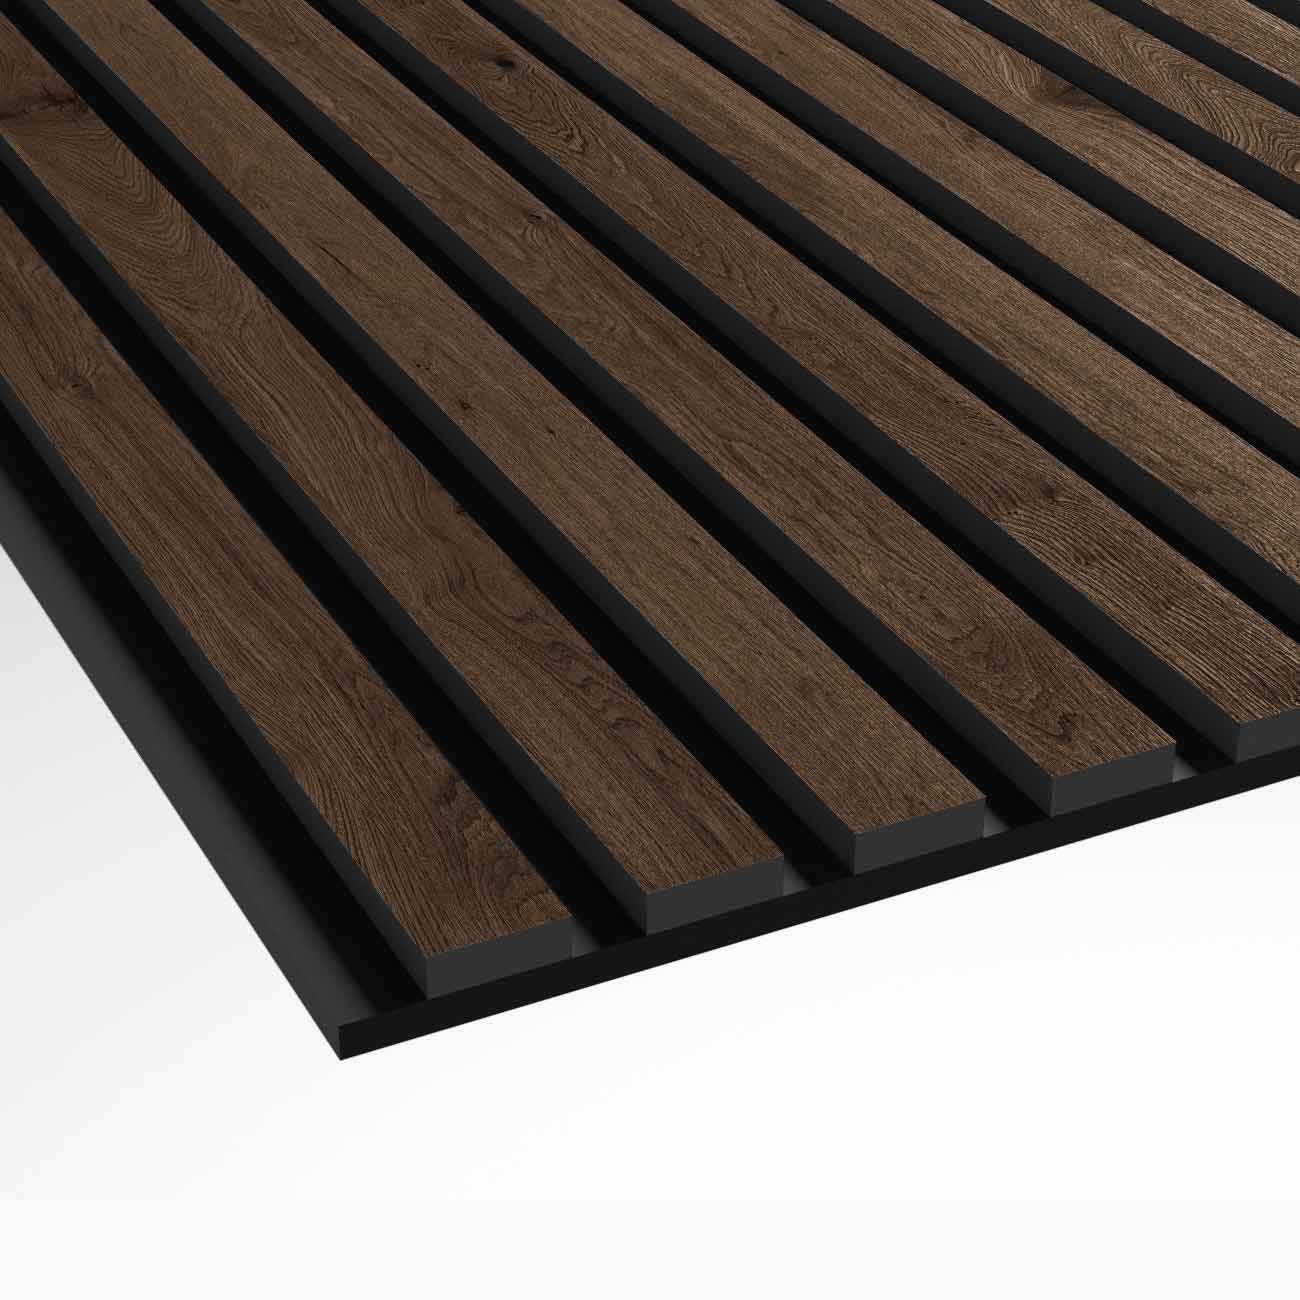 Smoked Oak Acoustic Slat Wood Panel 280 x 60 - Slats acoustic 3D Panels | DecorMania